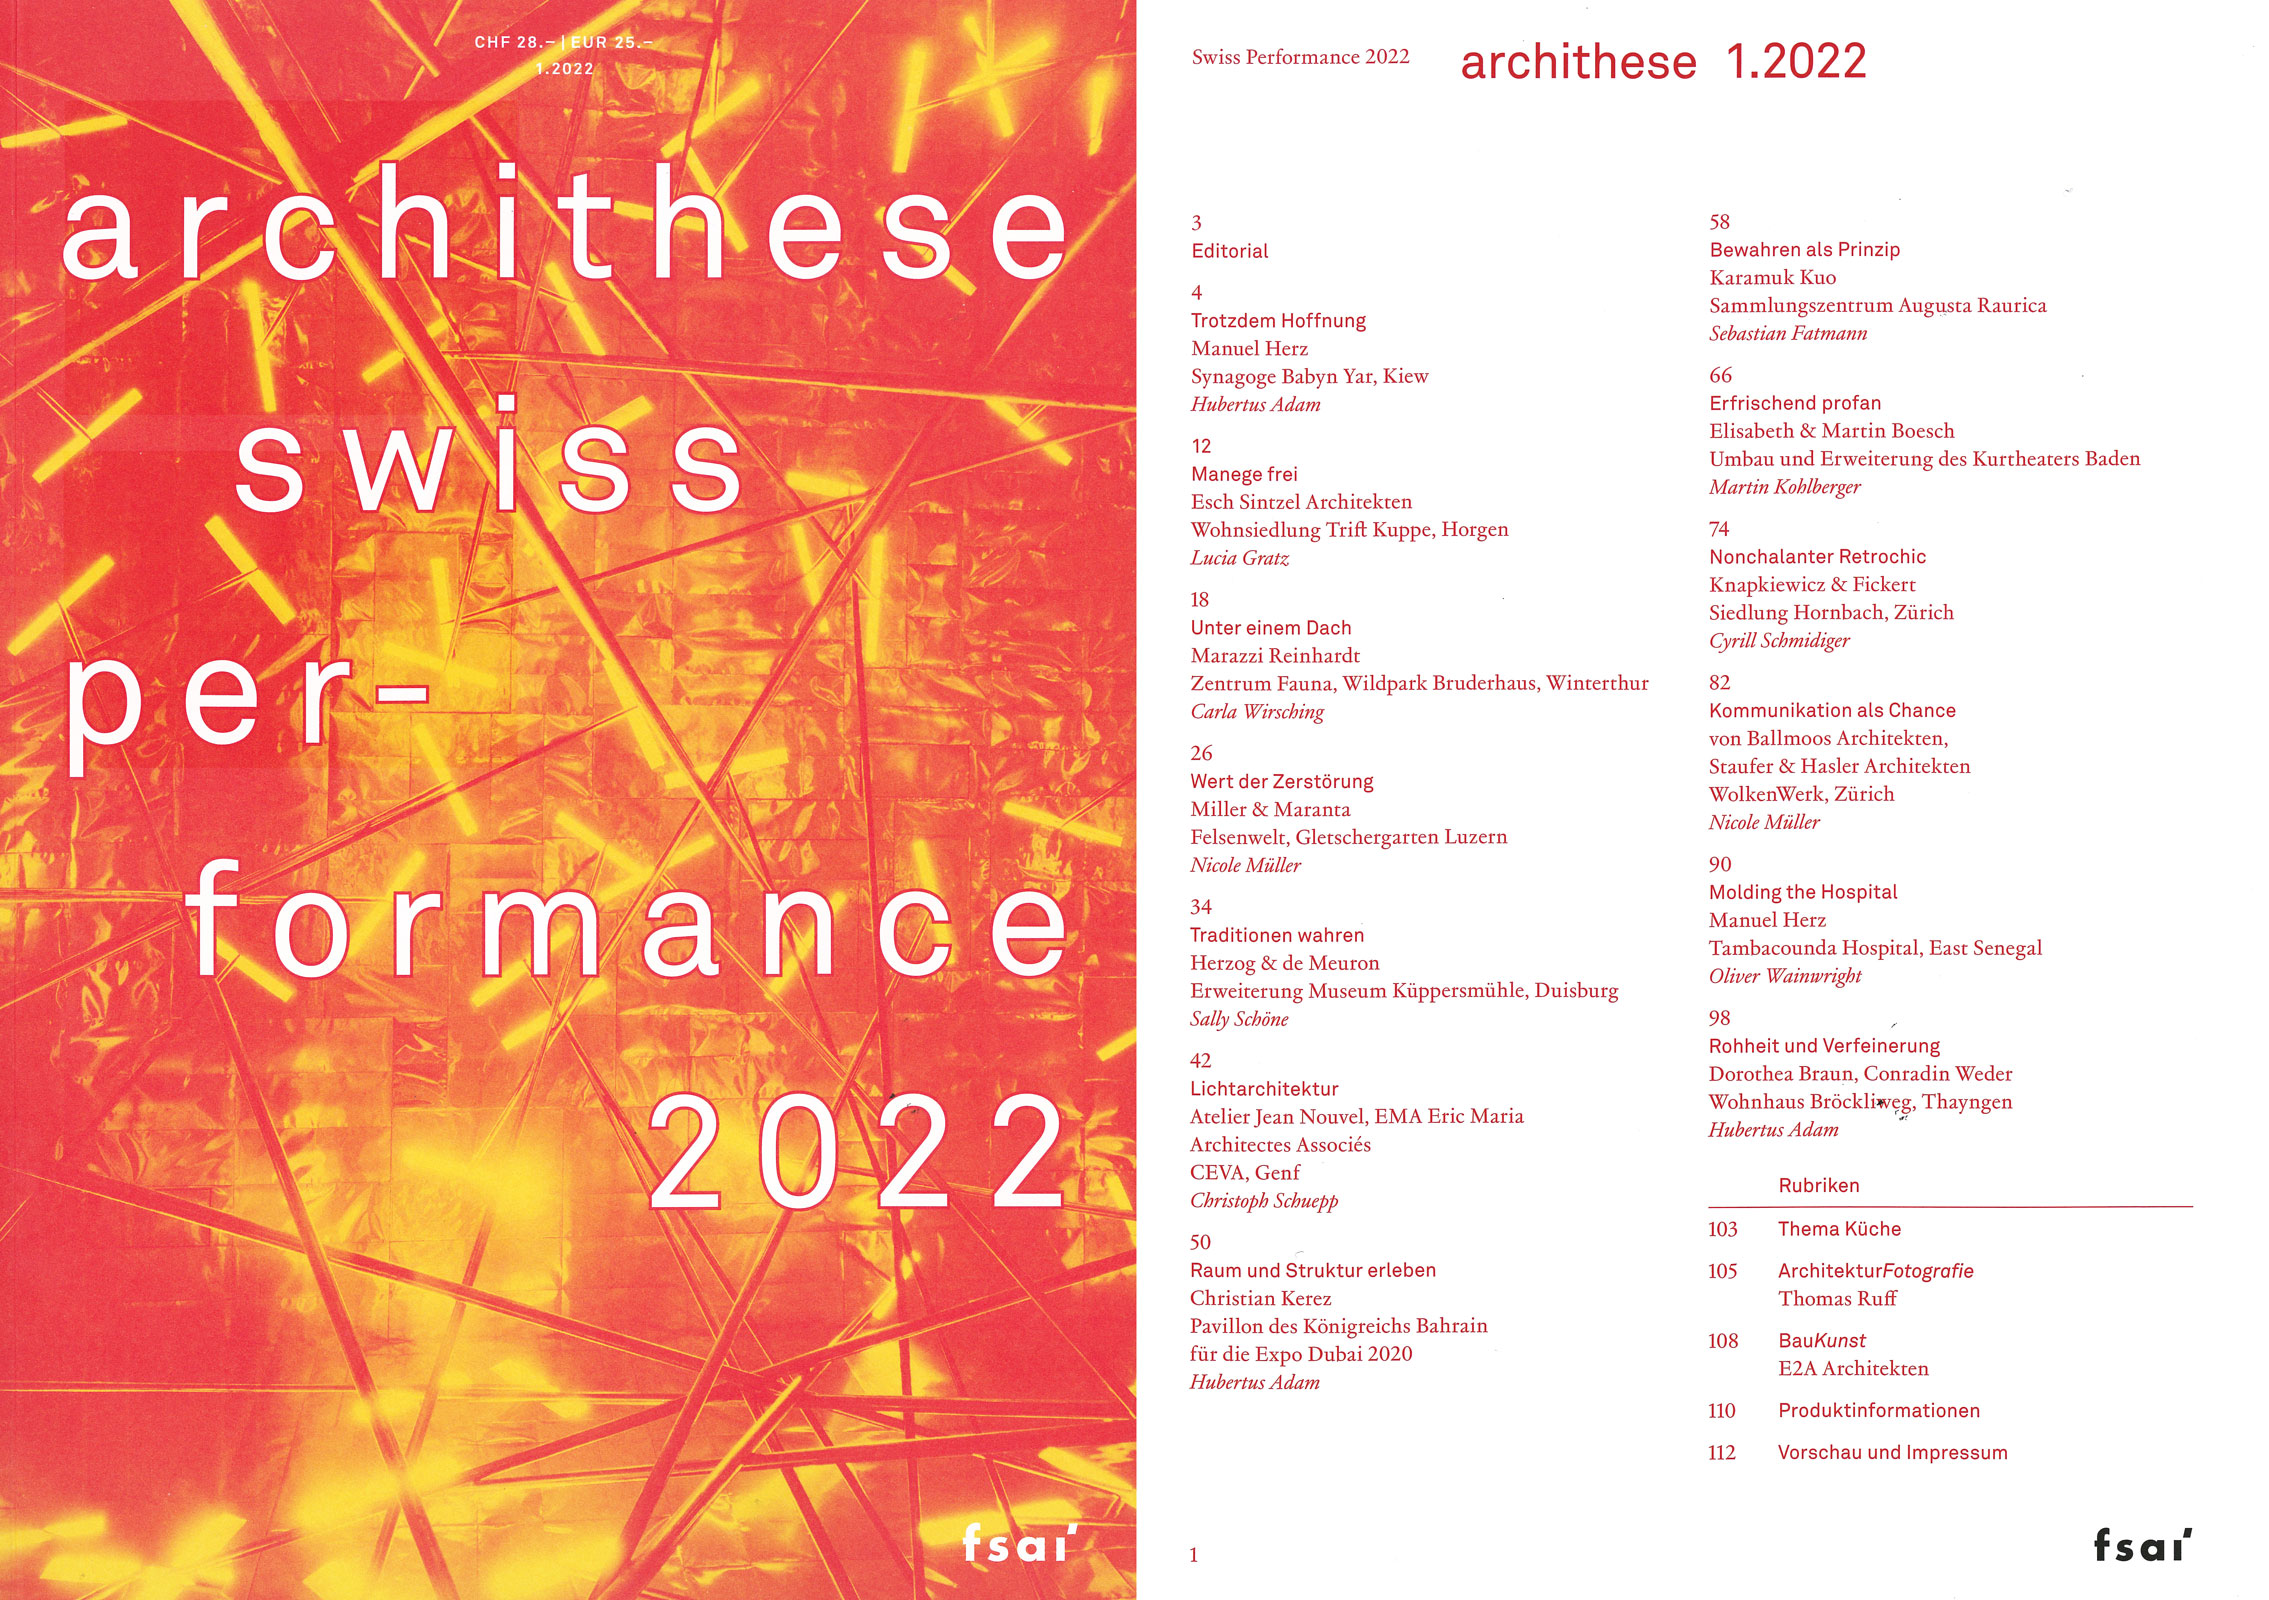 999architese swiss performance 2022